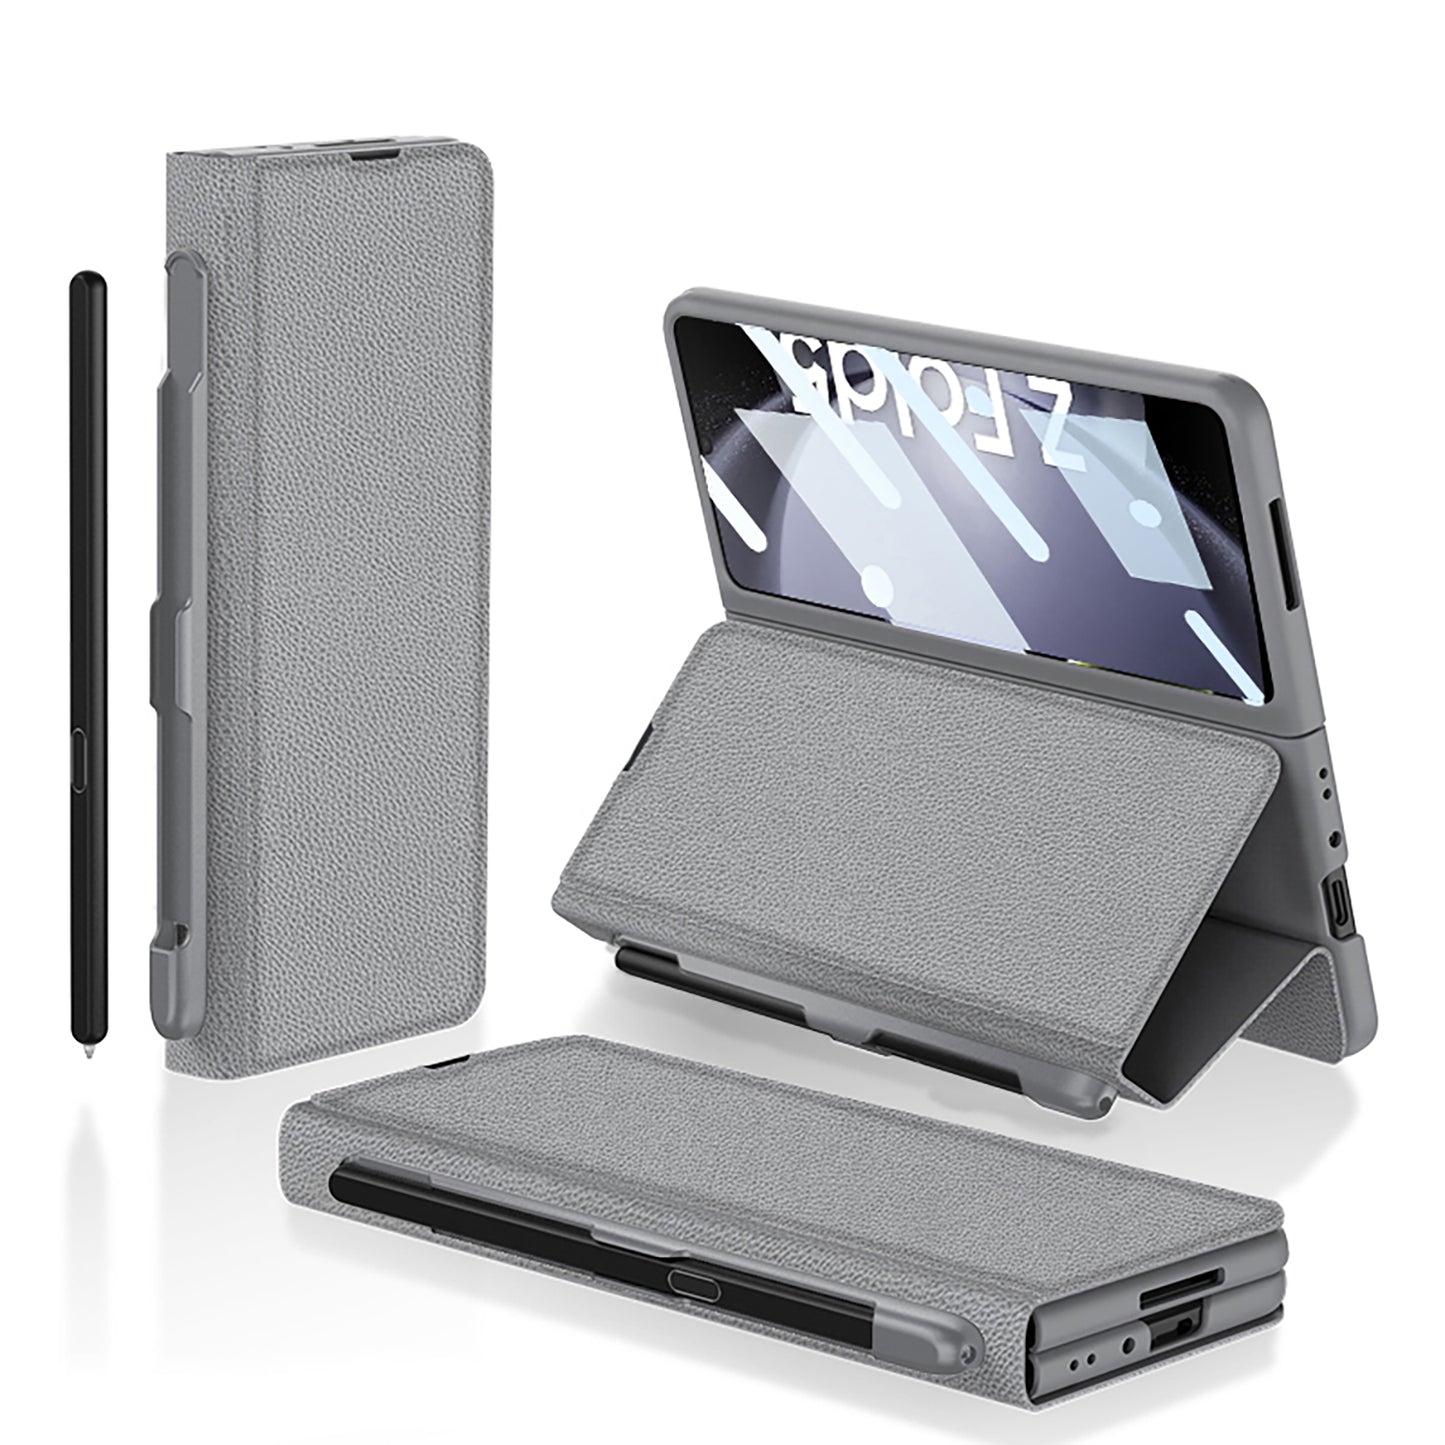 Business Style Galaxy Z Fold5 Case with Slim S Pen Slot